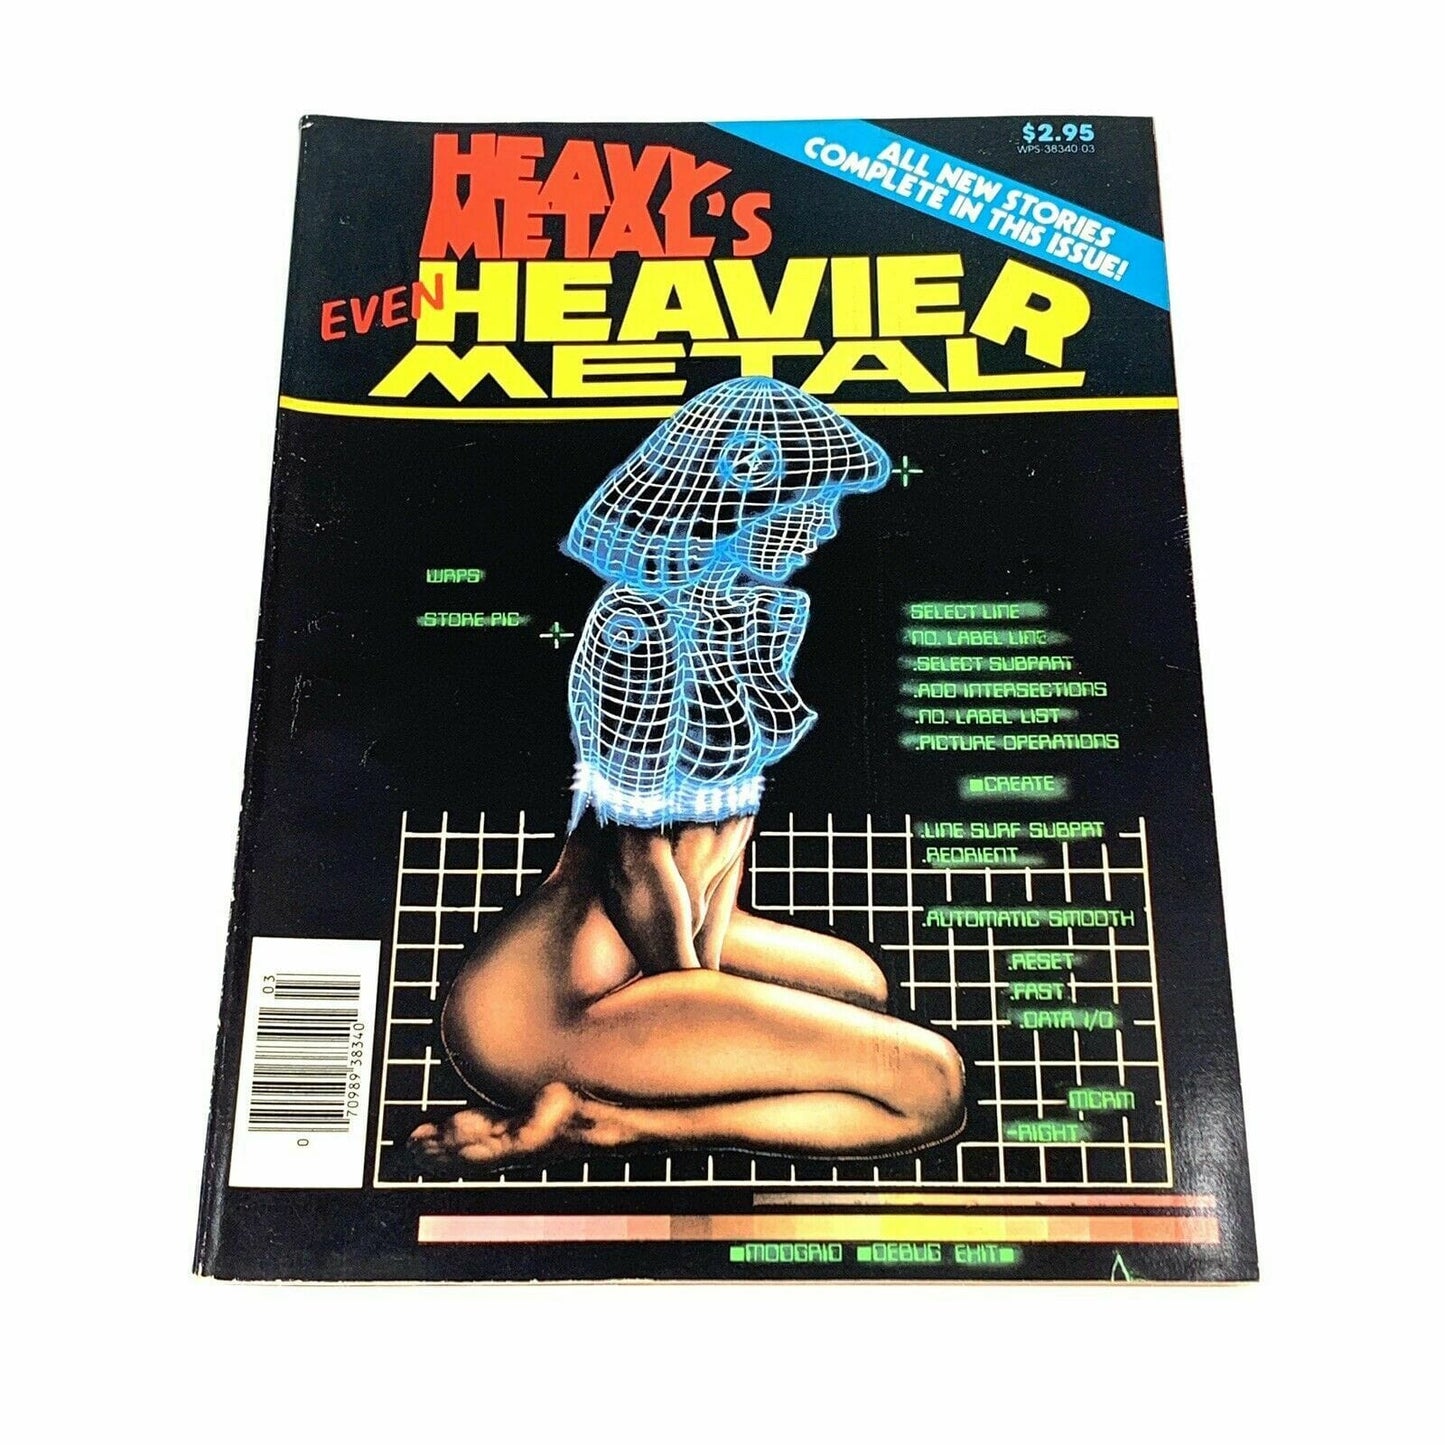 HEAVY METAL - Adult Illustrative Fantasy Magazine - 1983 Even Heavier Metal - parsimonyshoppes